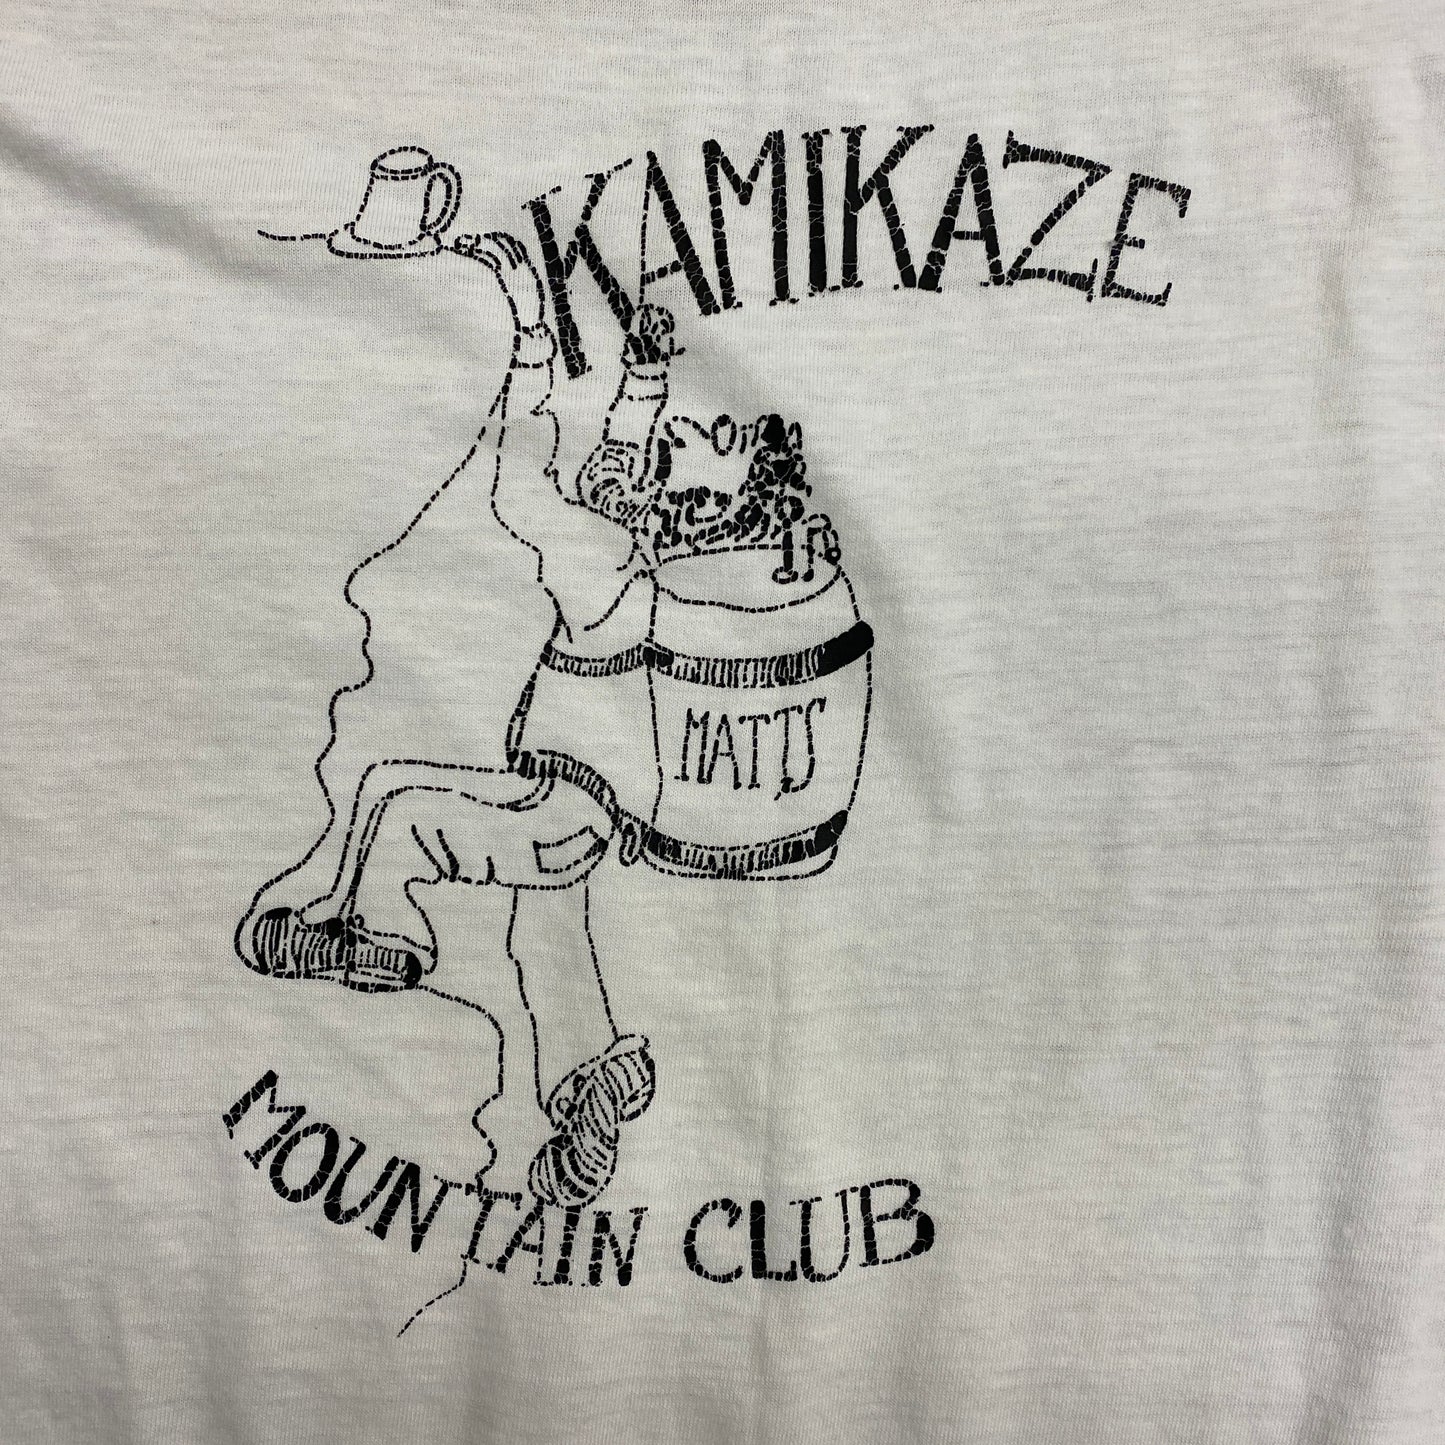 80s Kamikaze Mountain Club x Matt's Brewery Ringer Tee - Size Large